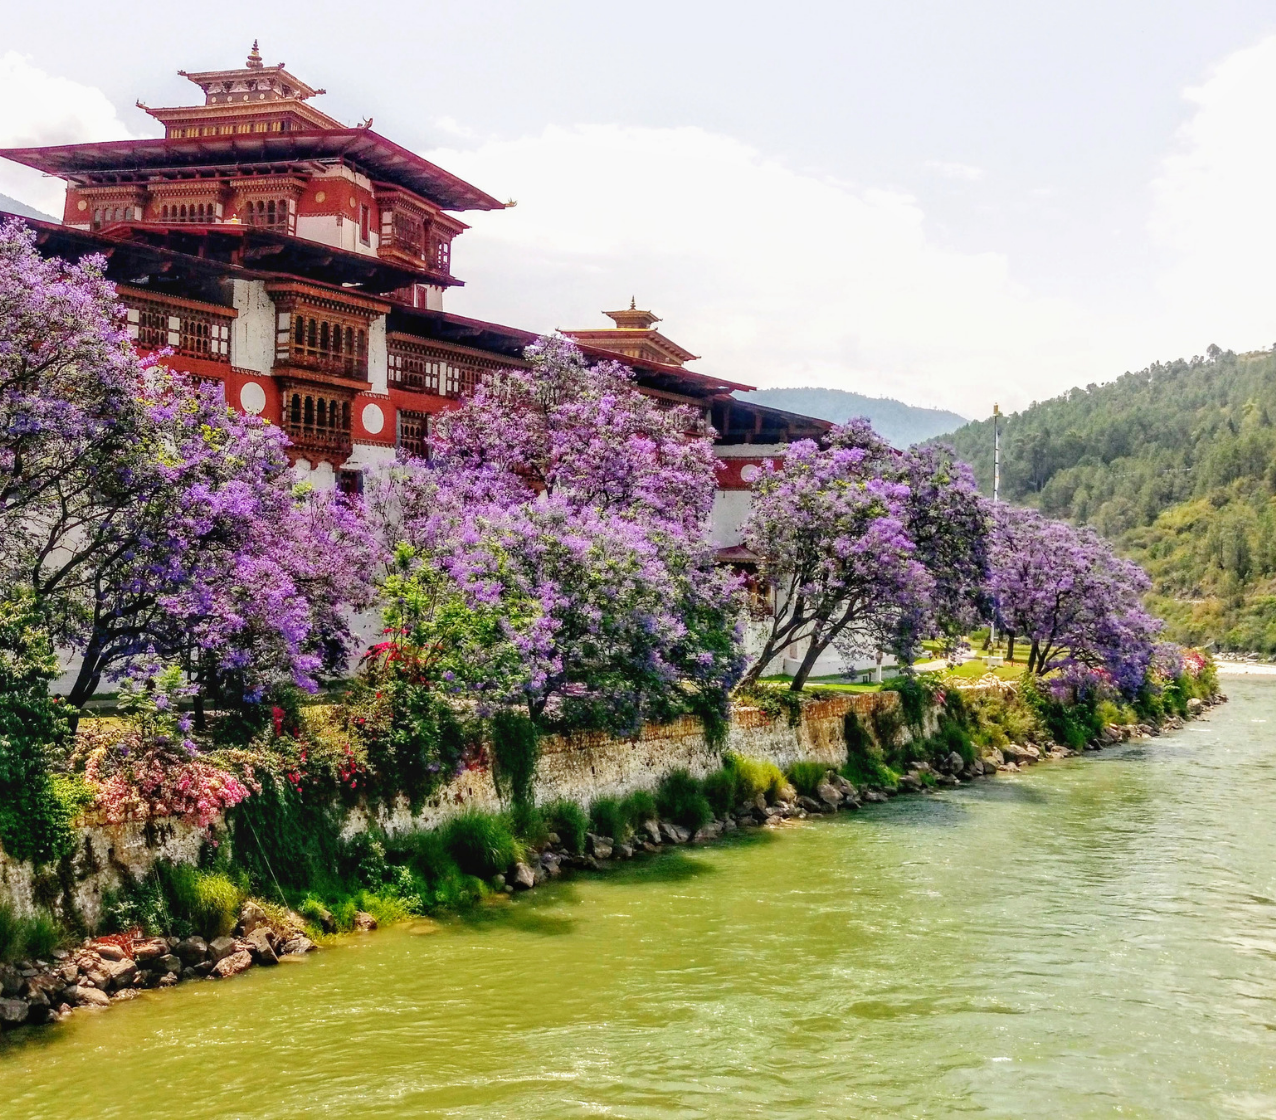 BHUTAN ROAD TRIP: THE SELF-DRIVE GUIDE